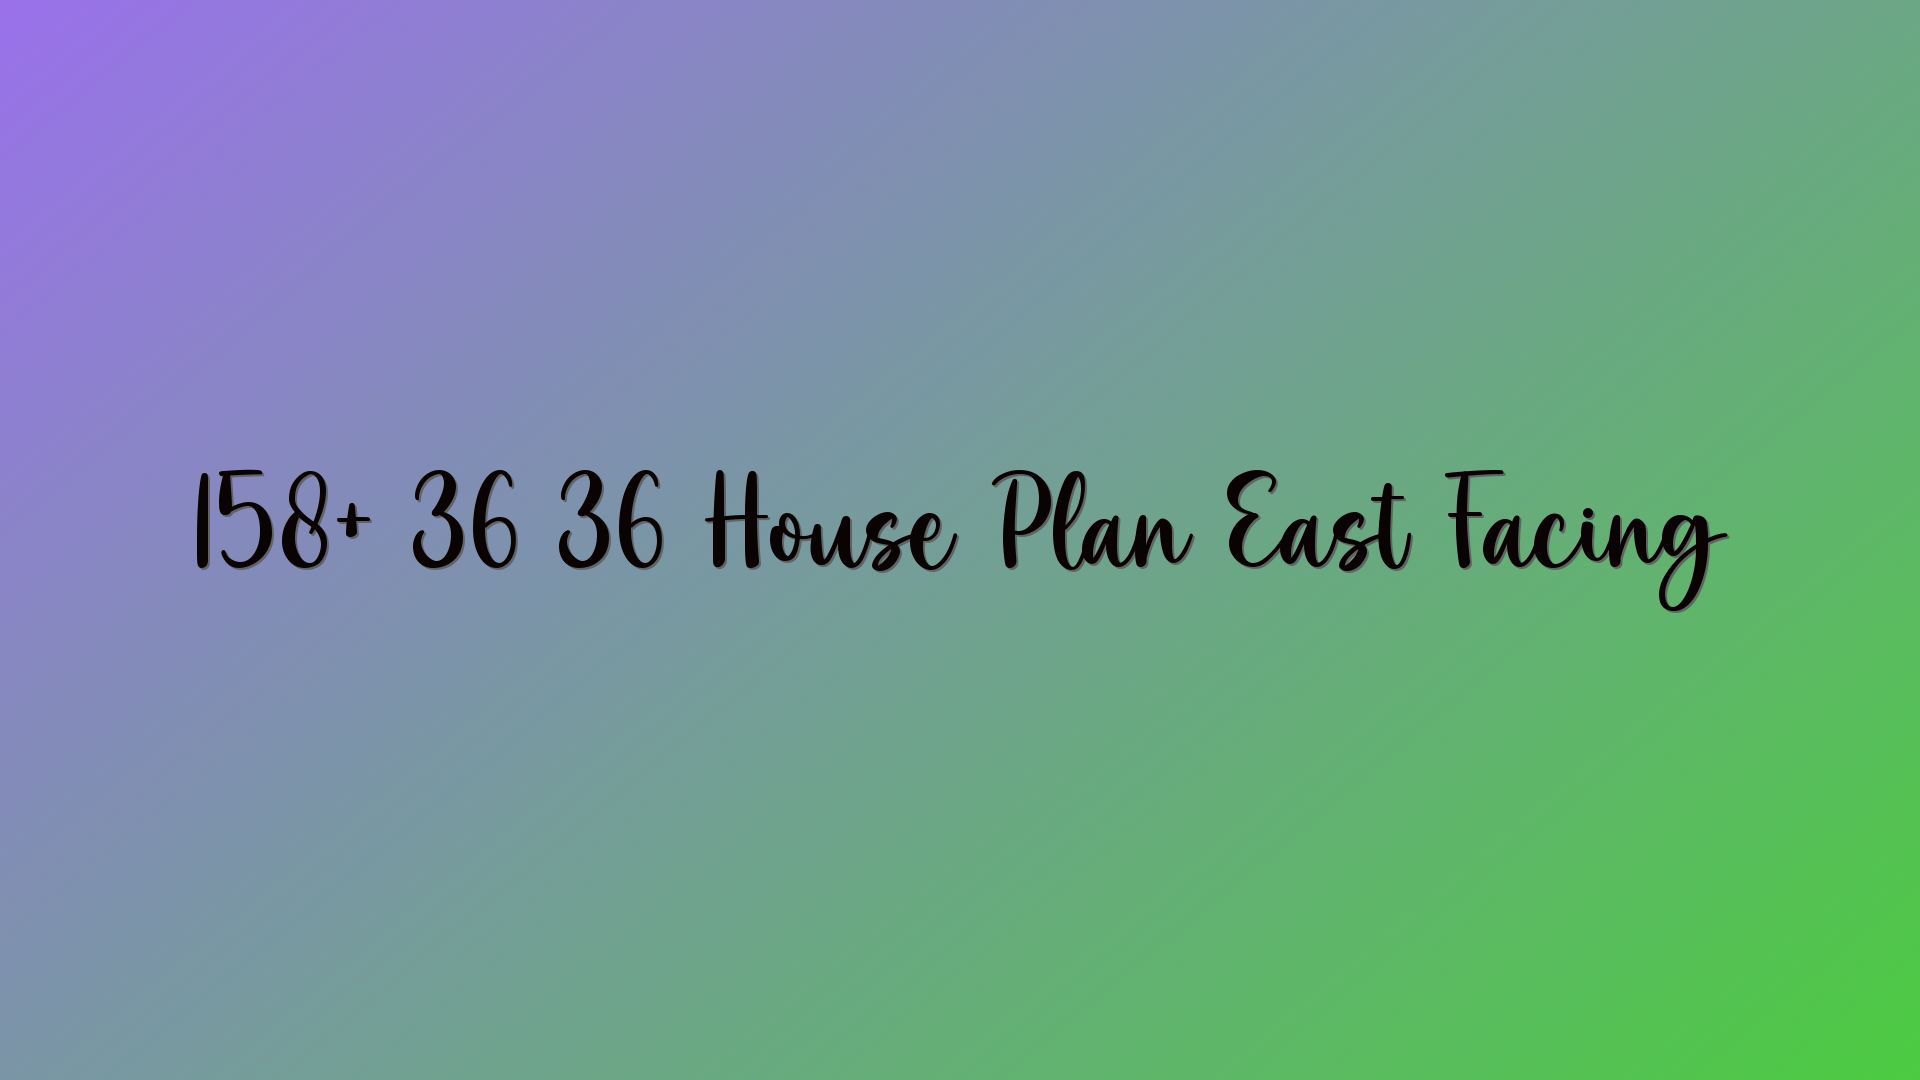 158+ 36 36 House Plan East Facing